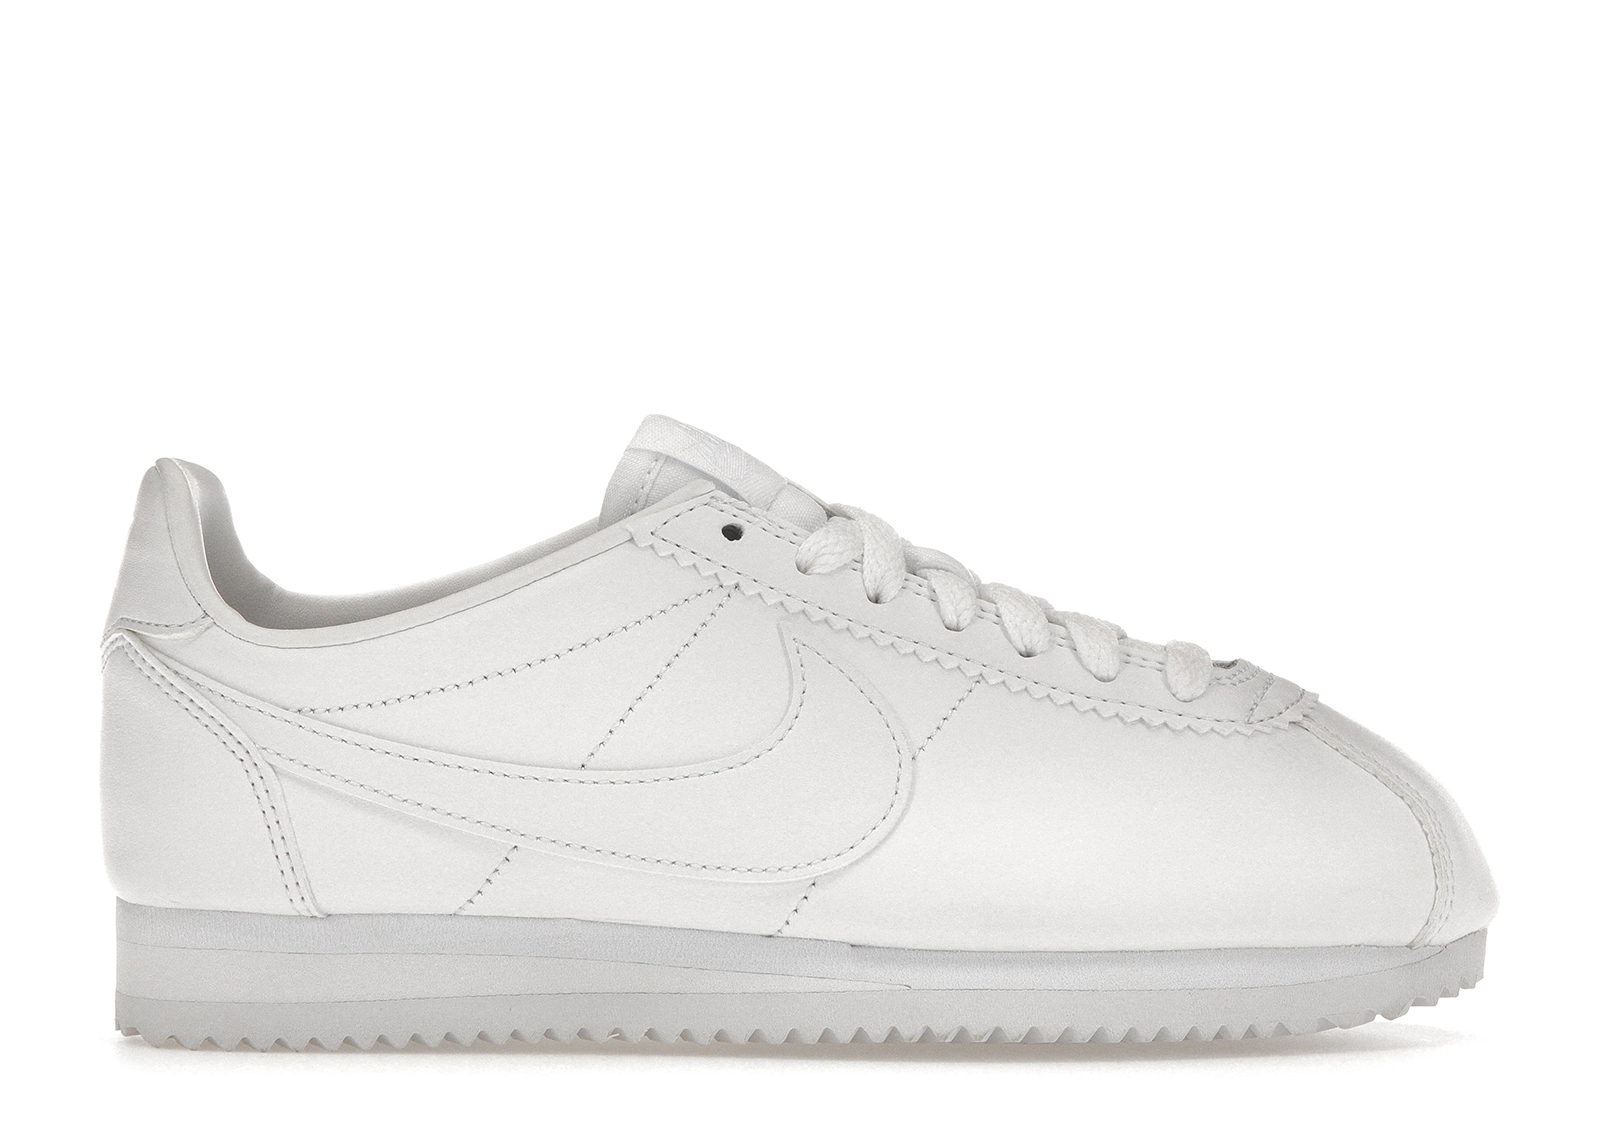 Nike Classic Cortez Leather White (Women's) - 807471-102 - JP